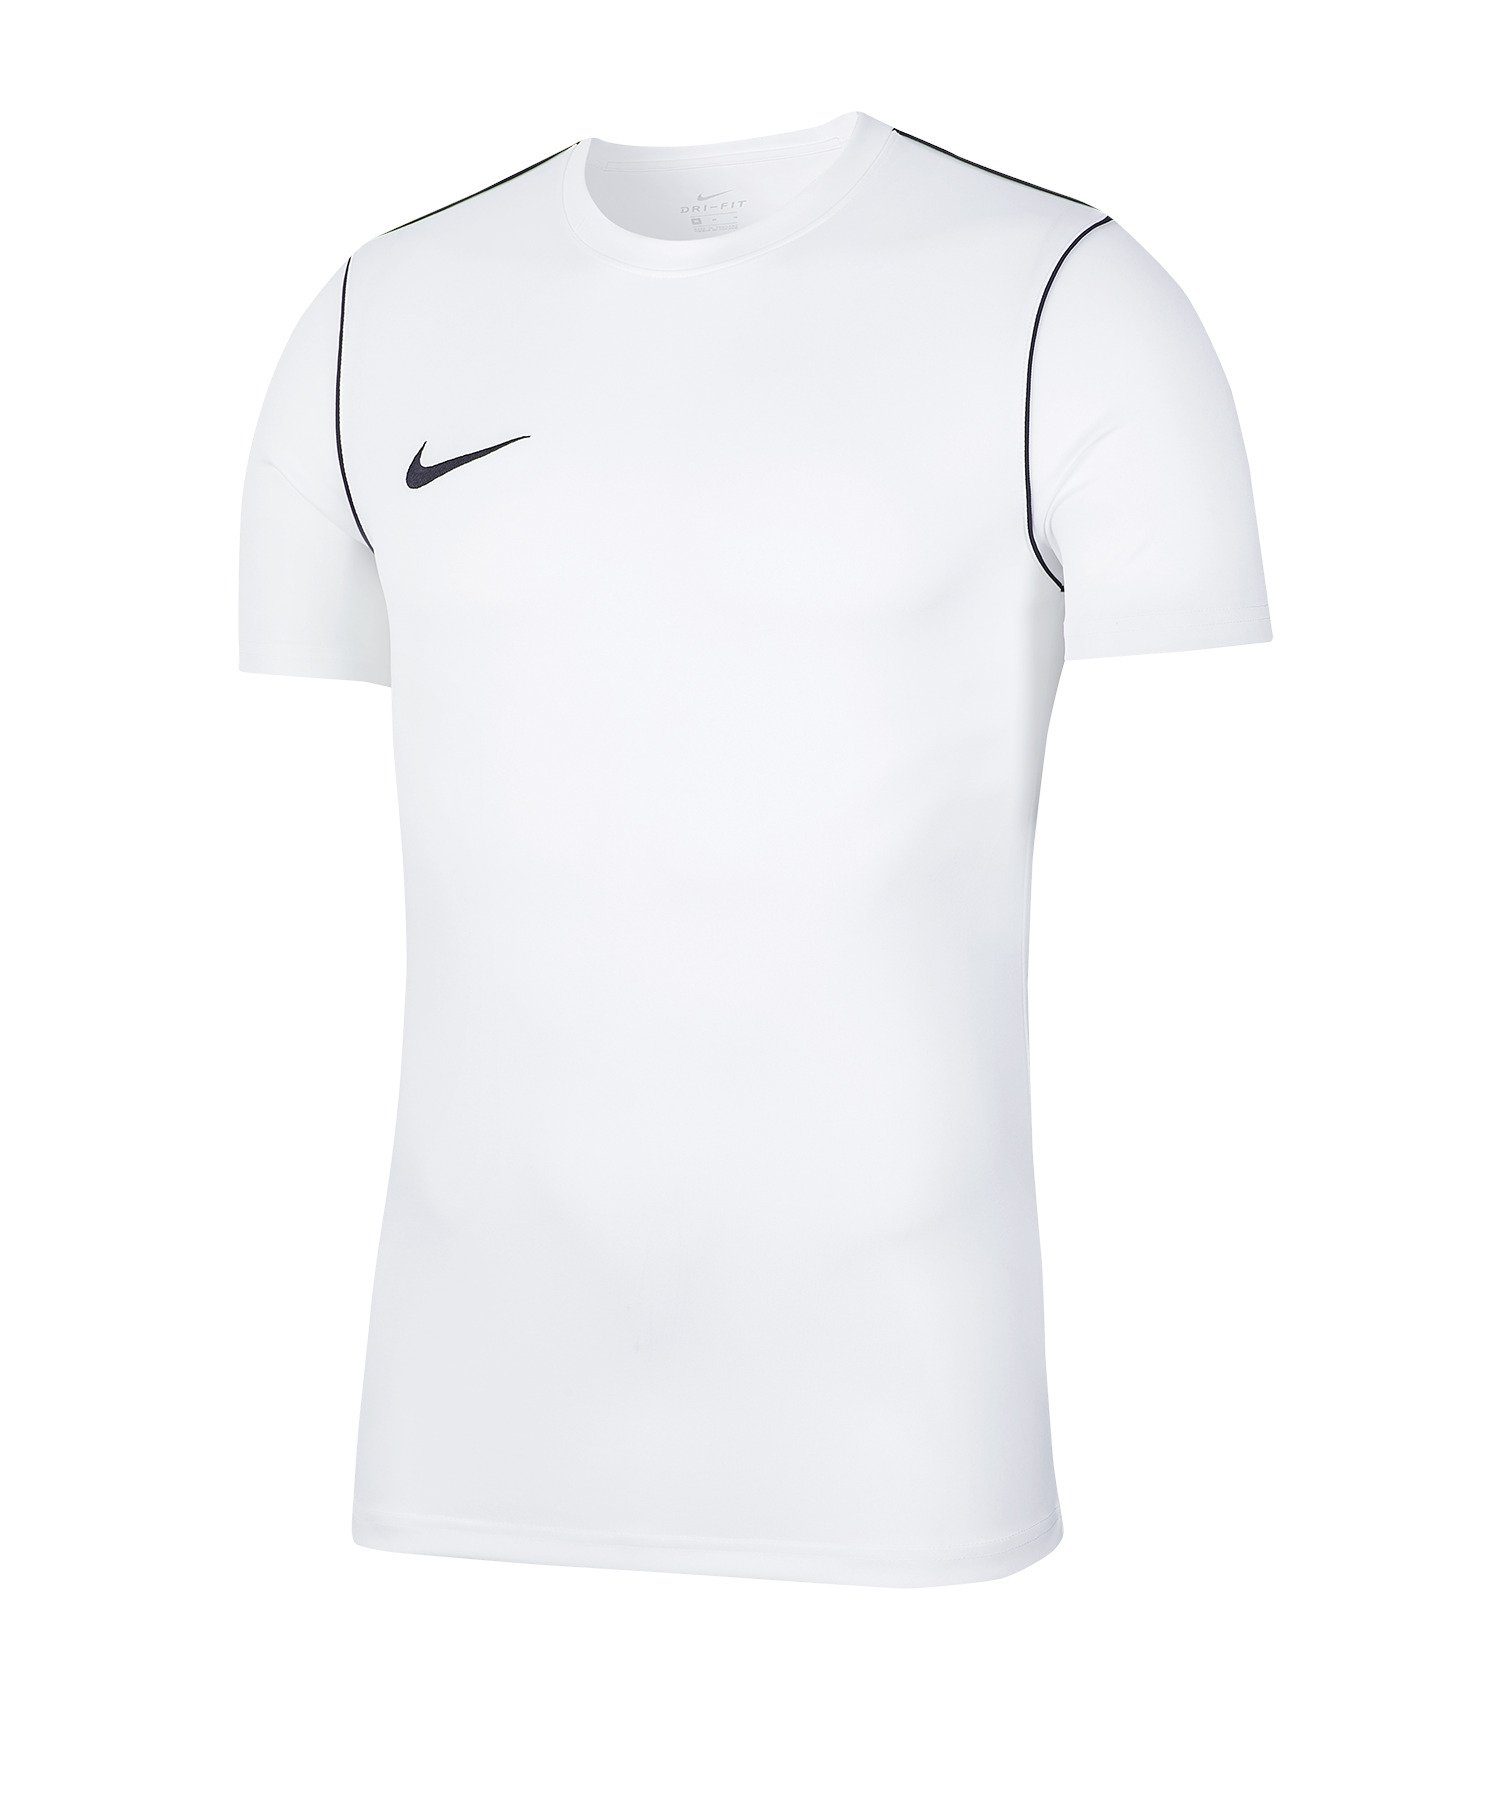 Alle Artikel sind im Angebot Nike T-Shirt Training default Shirt Park weiss 20